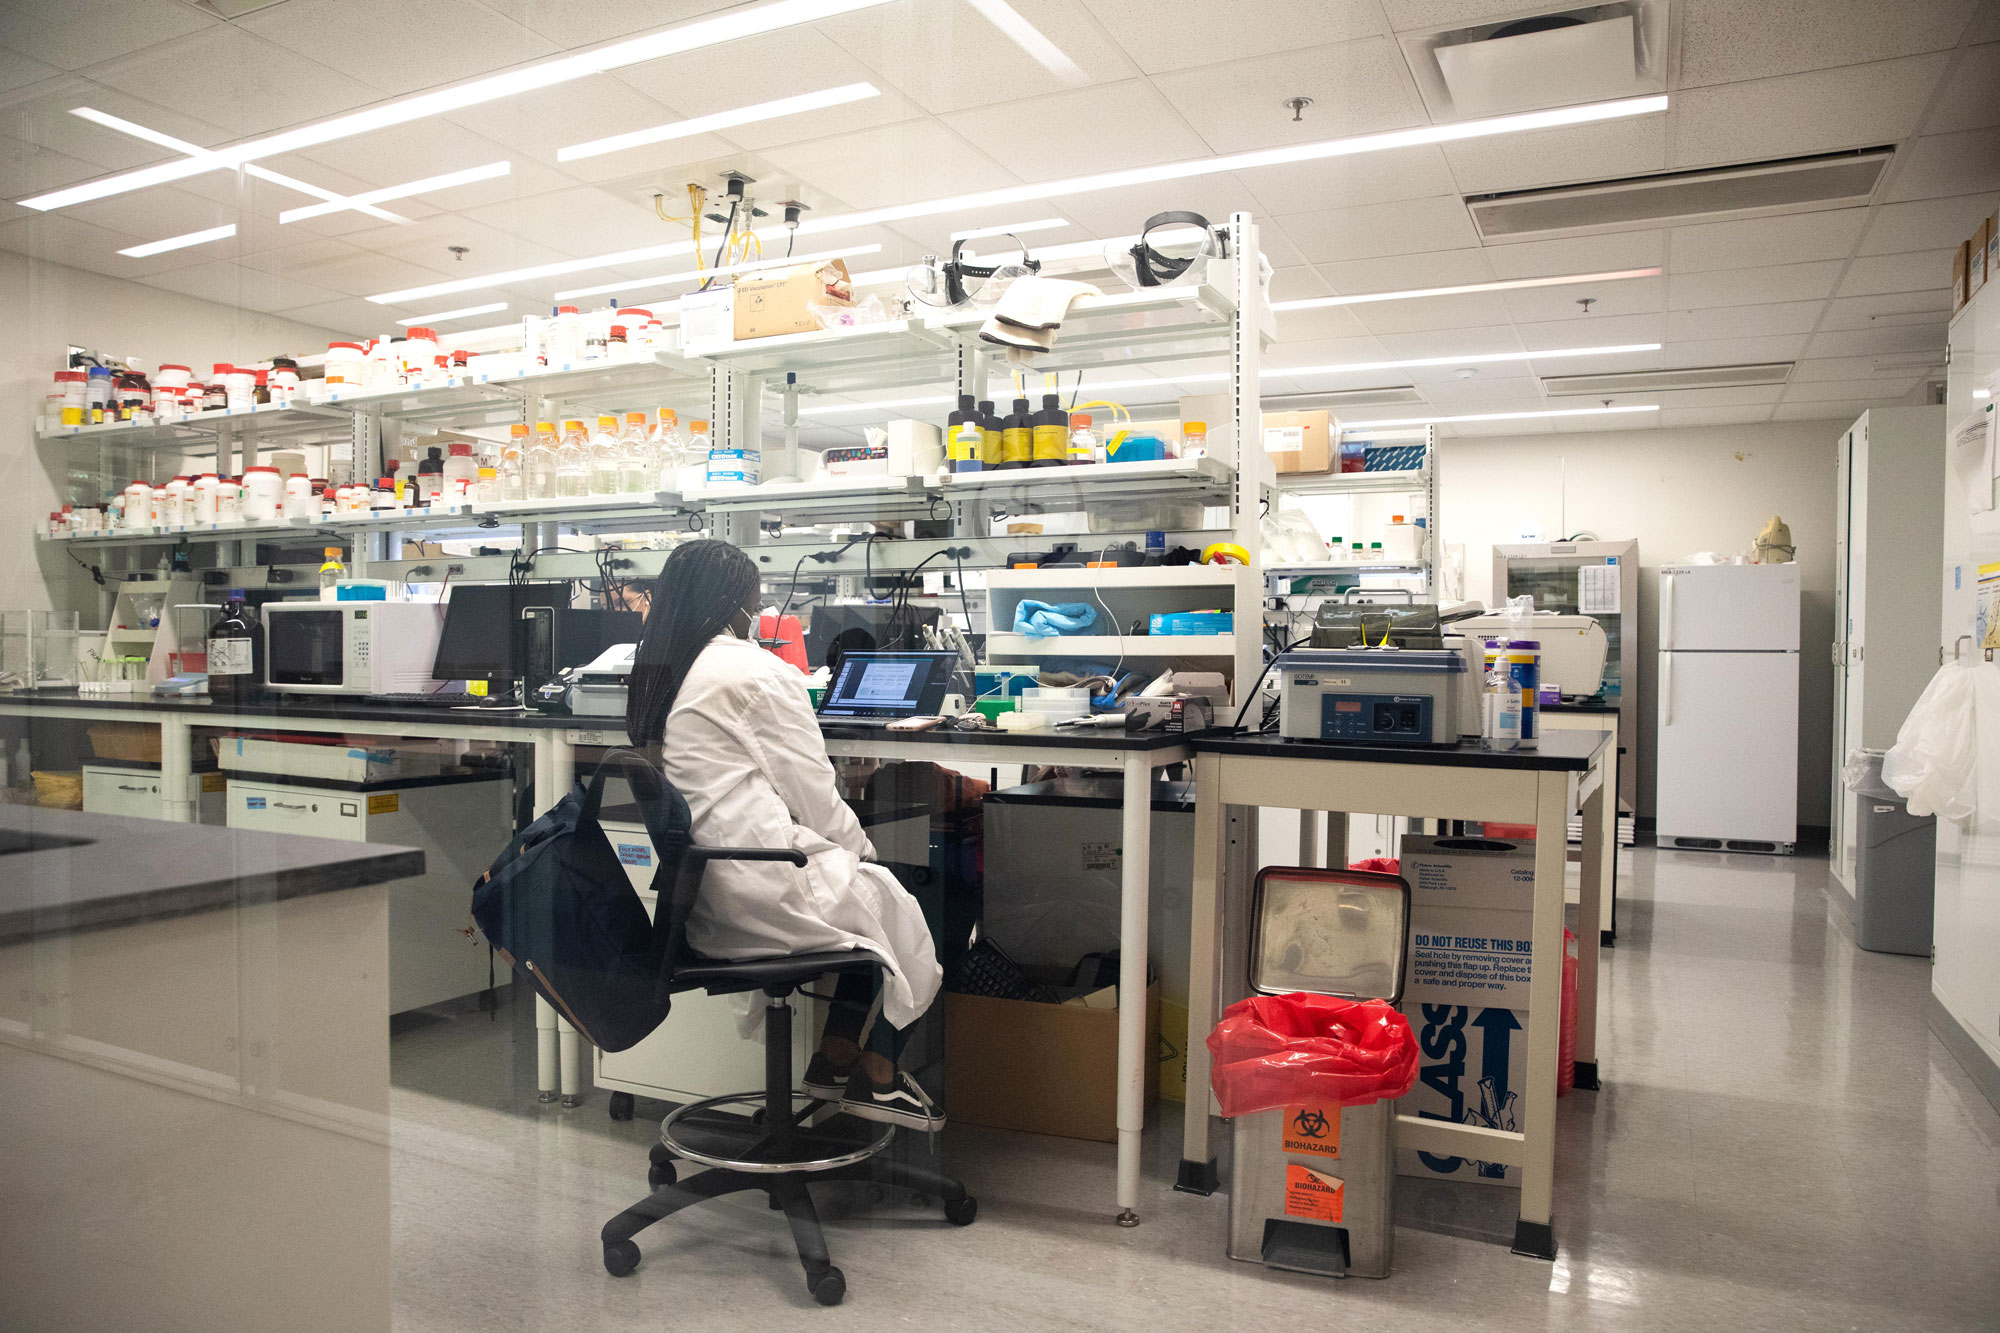 Lab study capture of Morehouse School of Medicine in Atlanta